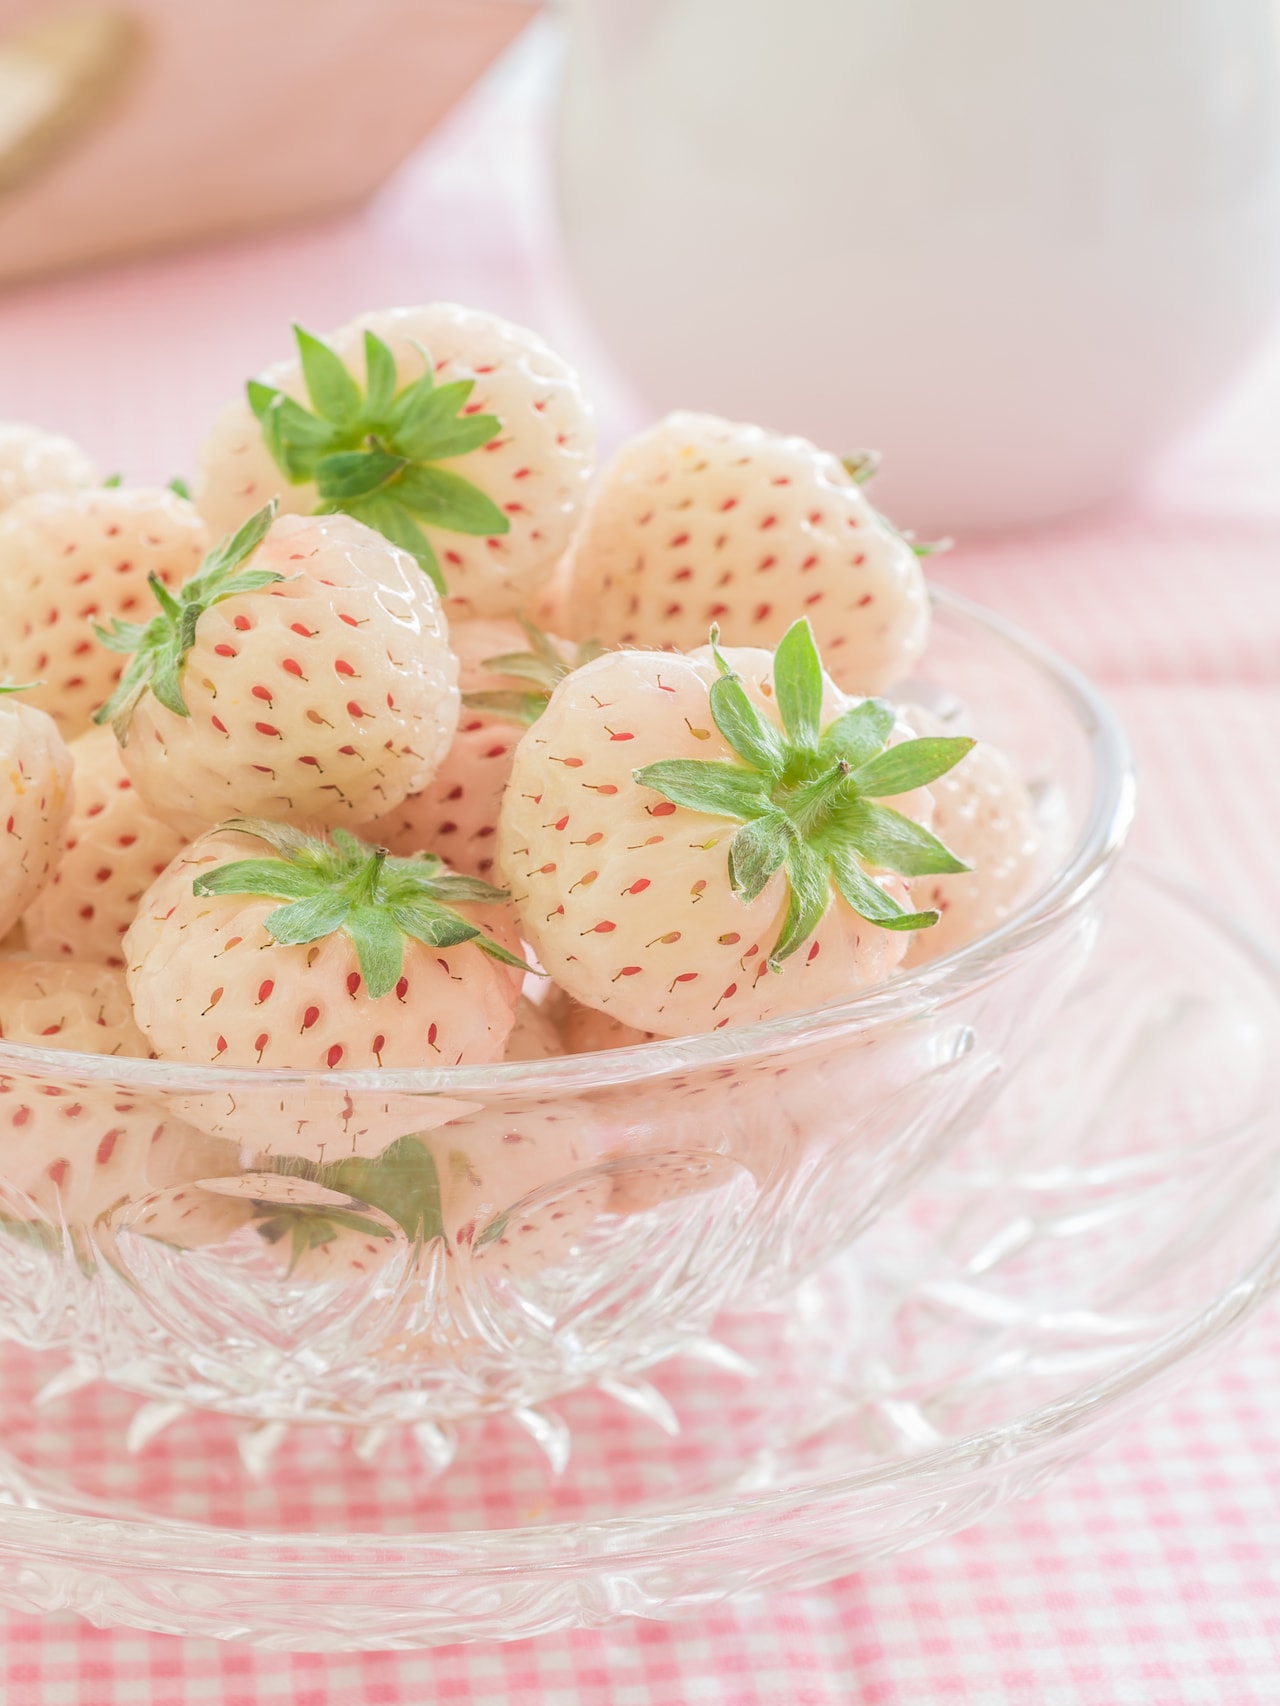 7 Health Benefits of Pineberries